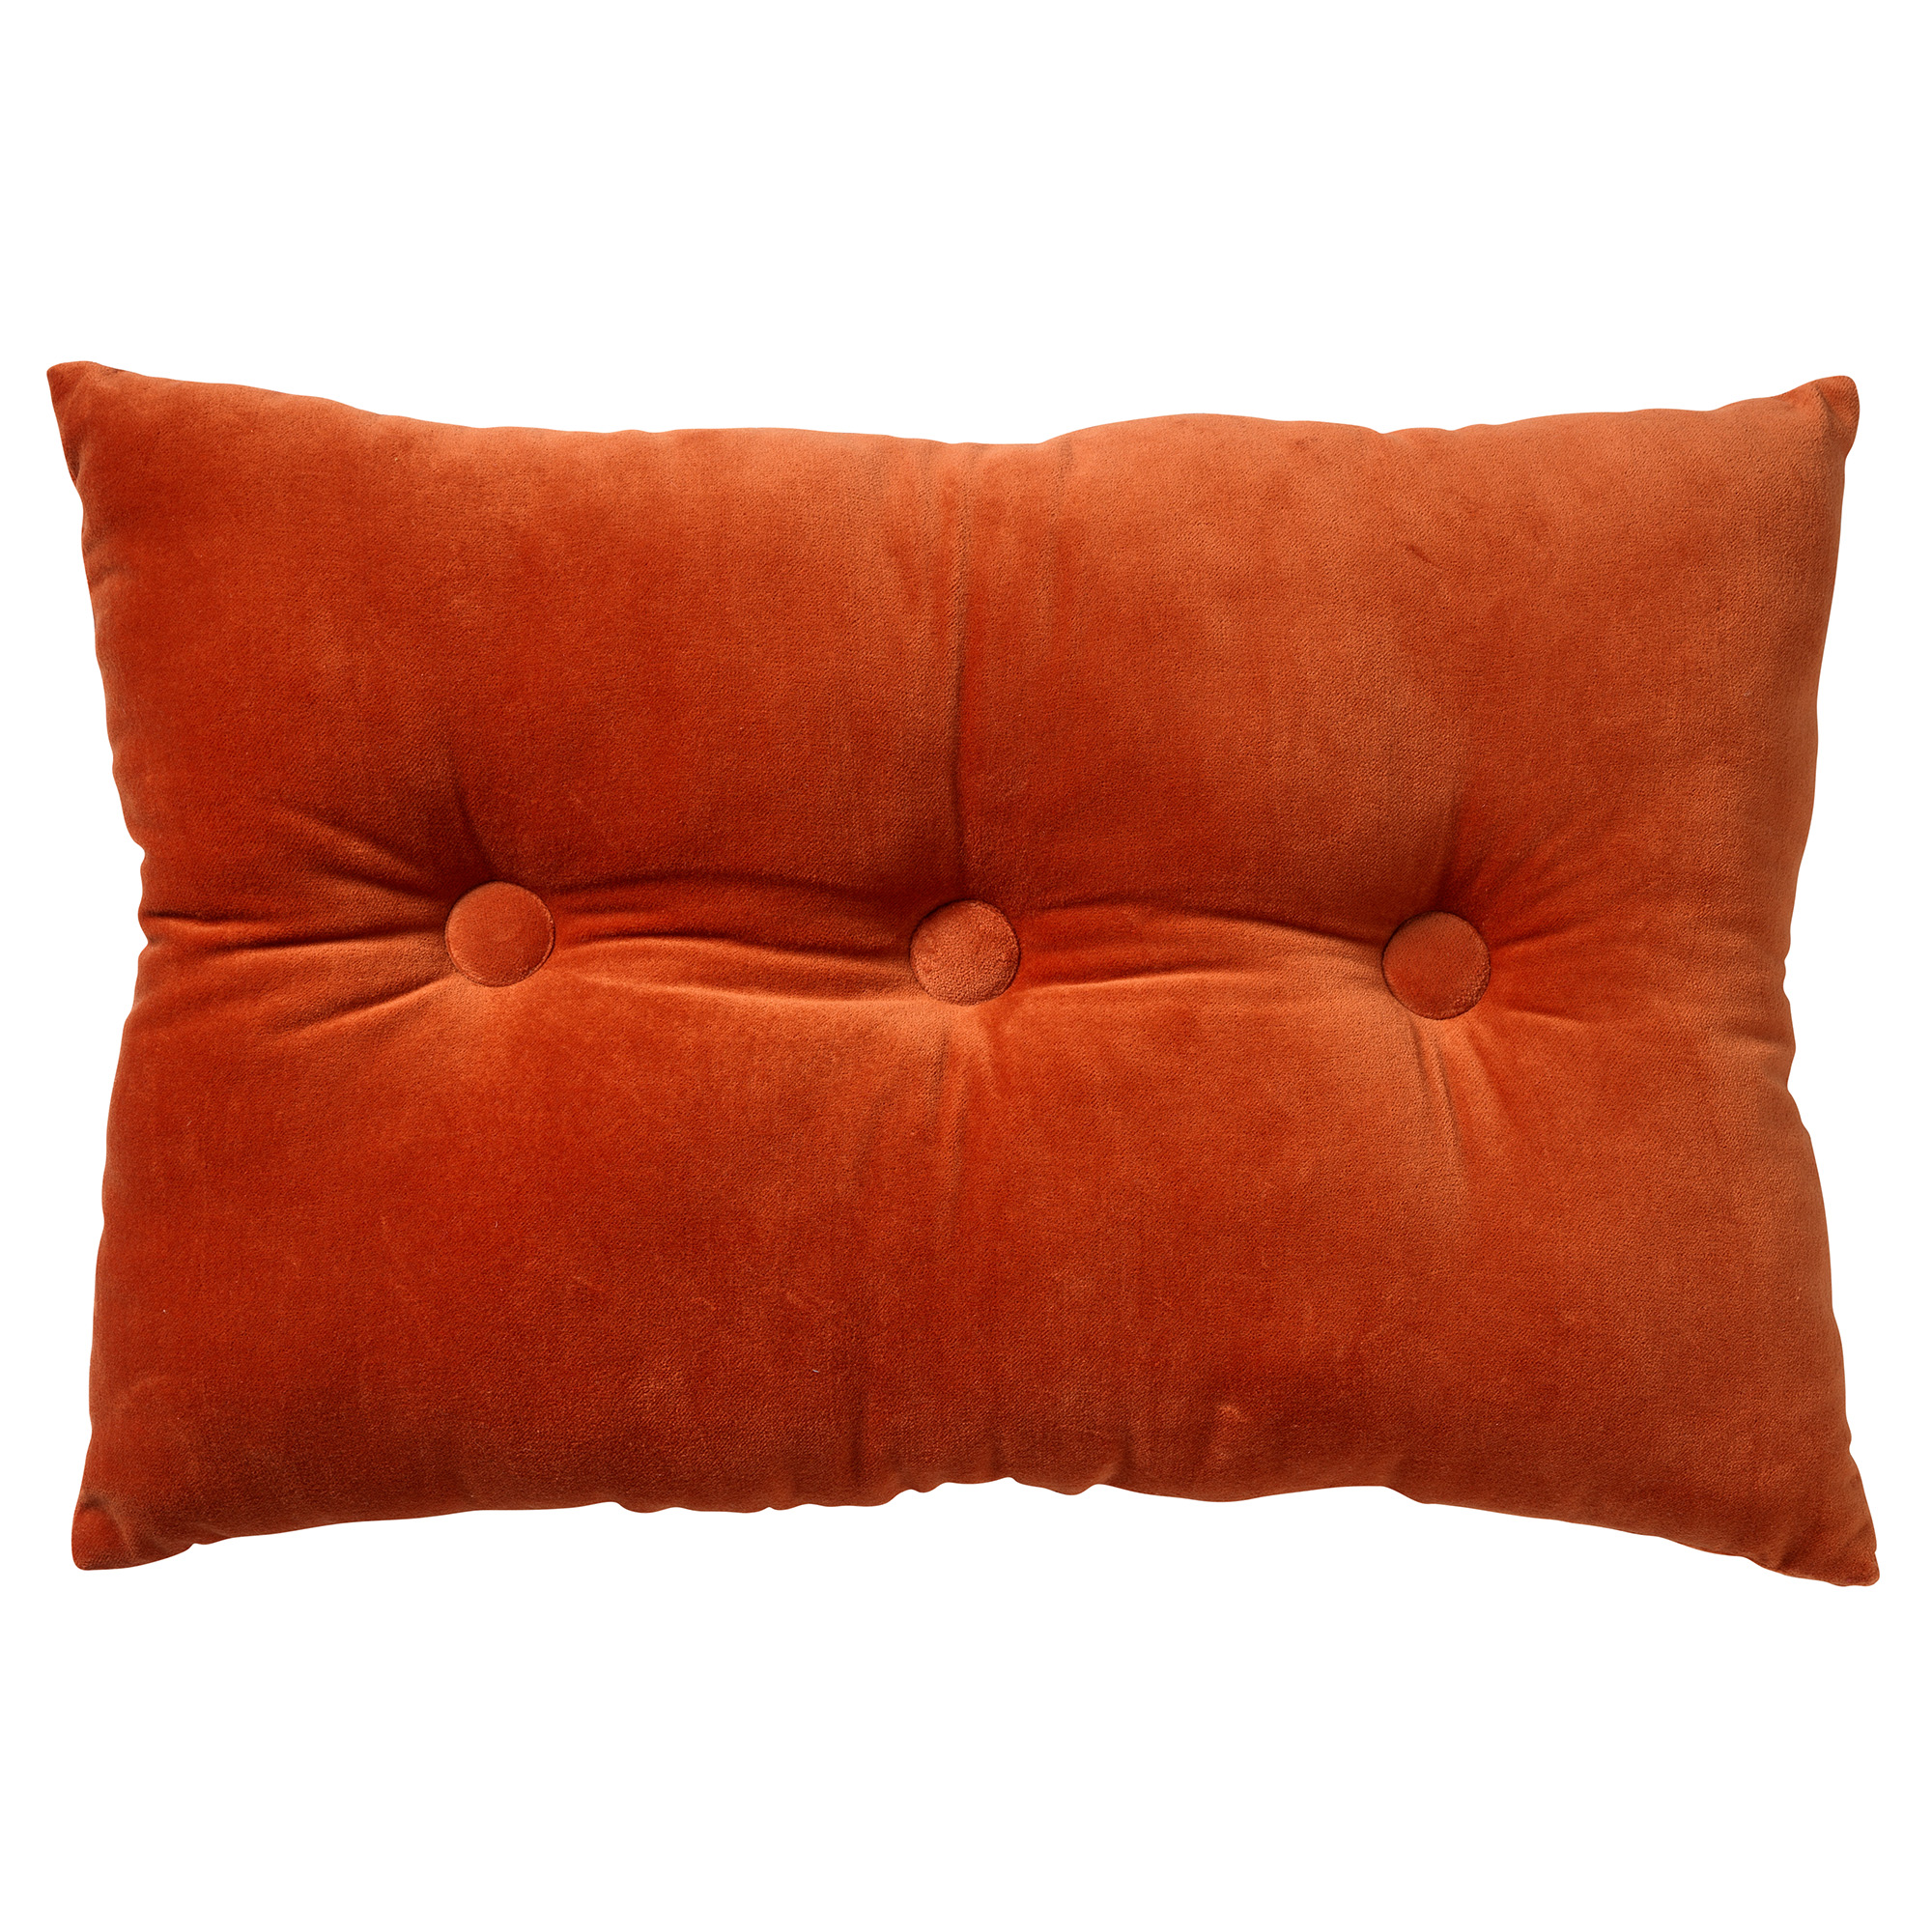 VALERIE - Cushion 40x60 cm Potters Clay - orange-terracotta